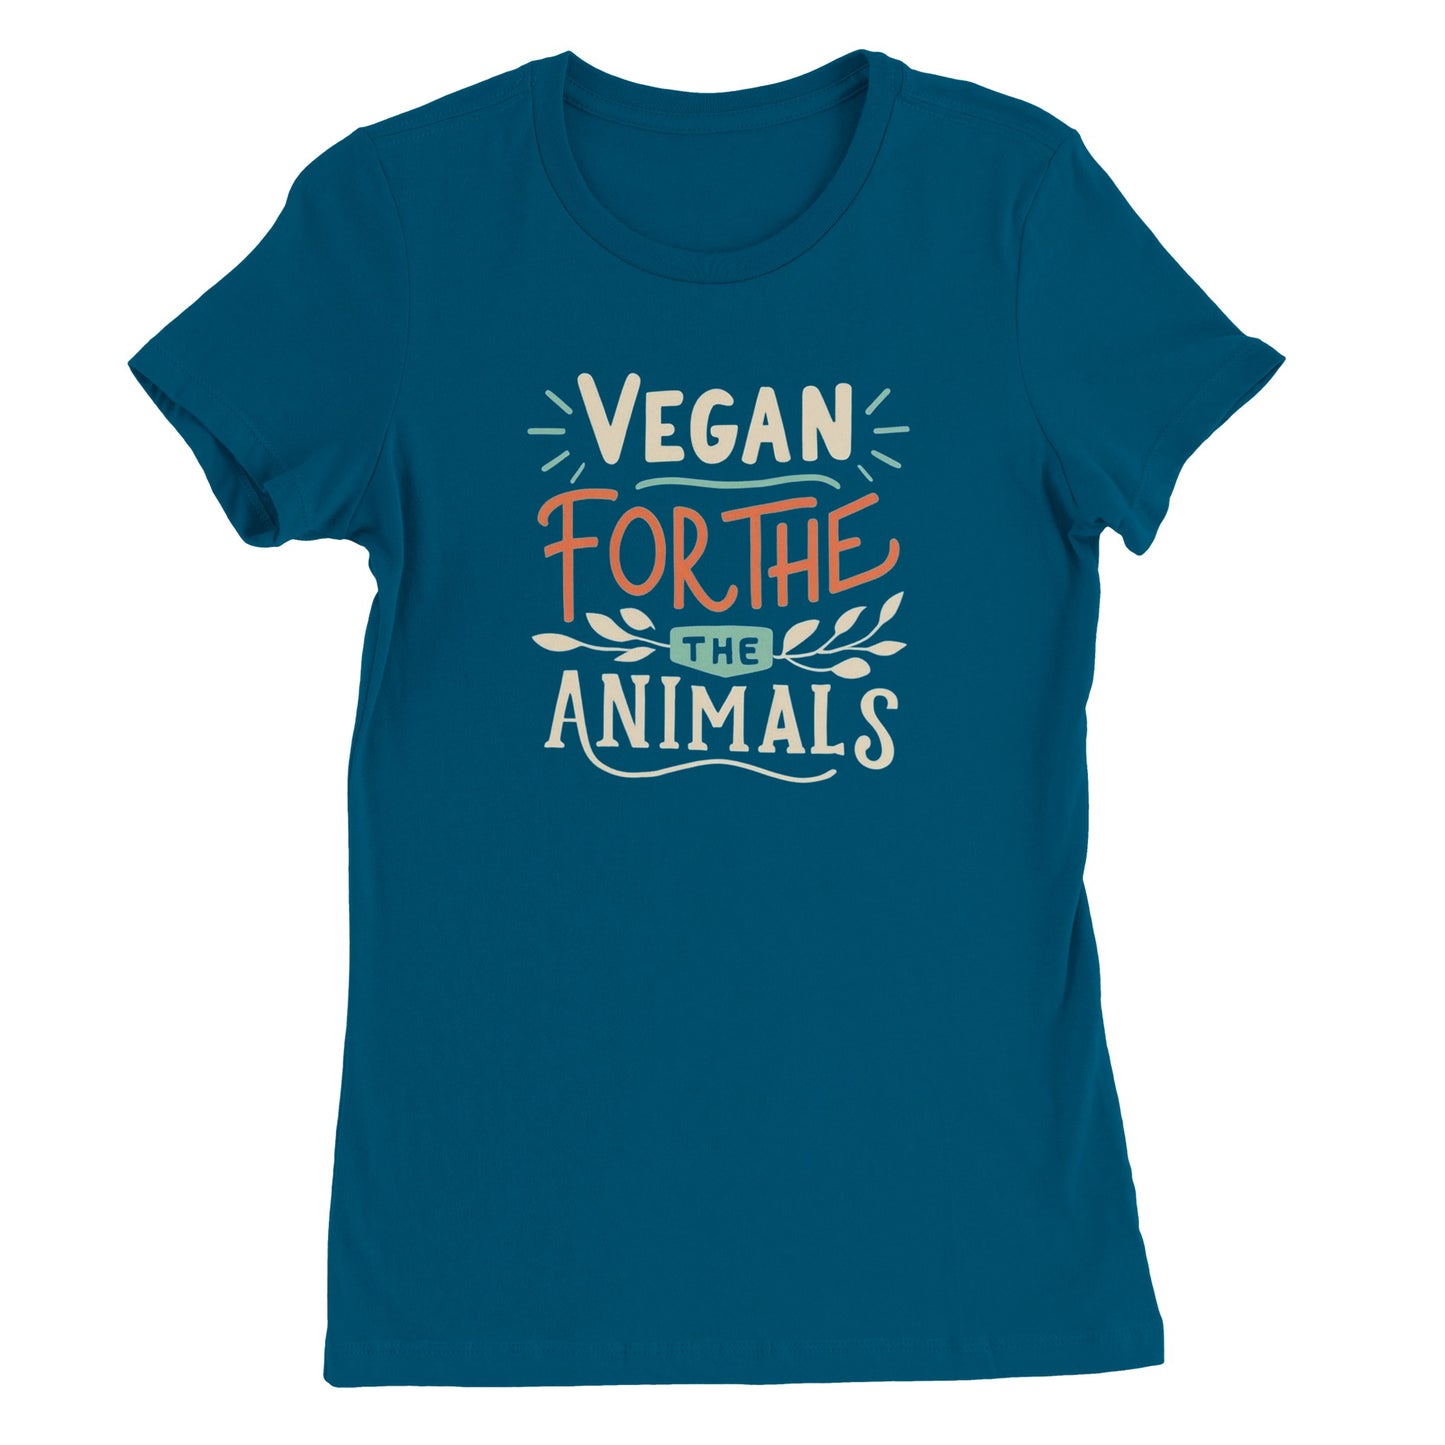 Vegan for the Animals - Women's Style